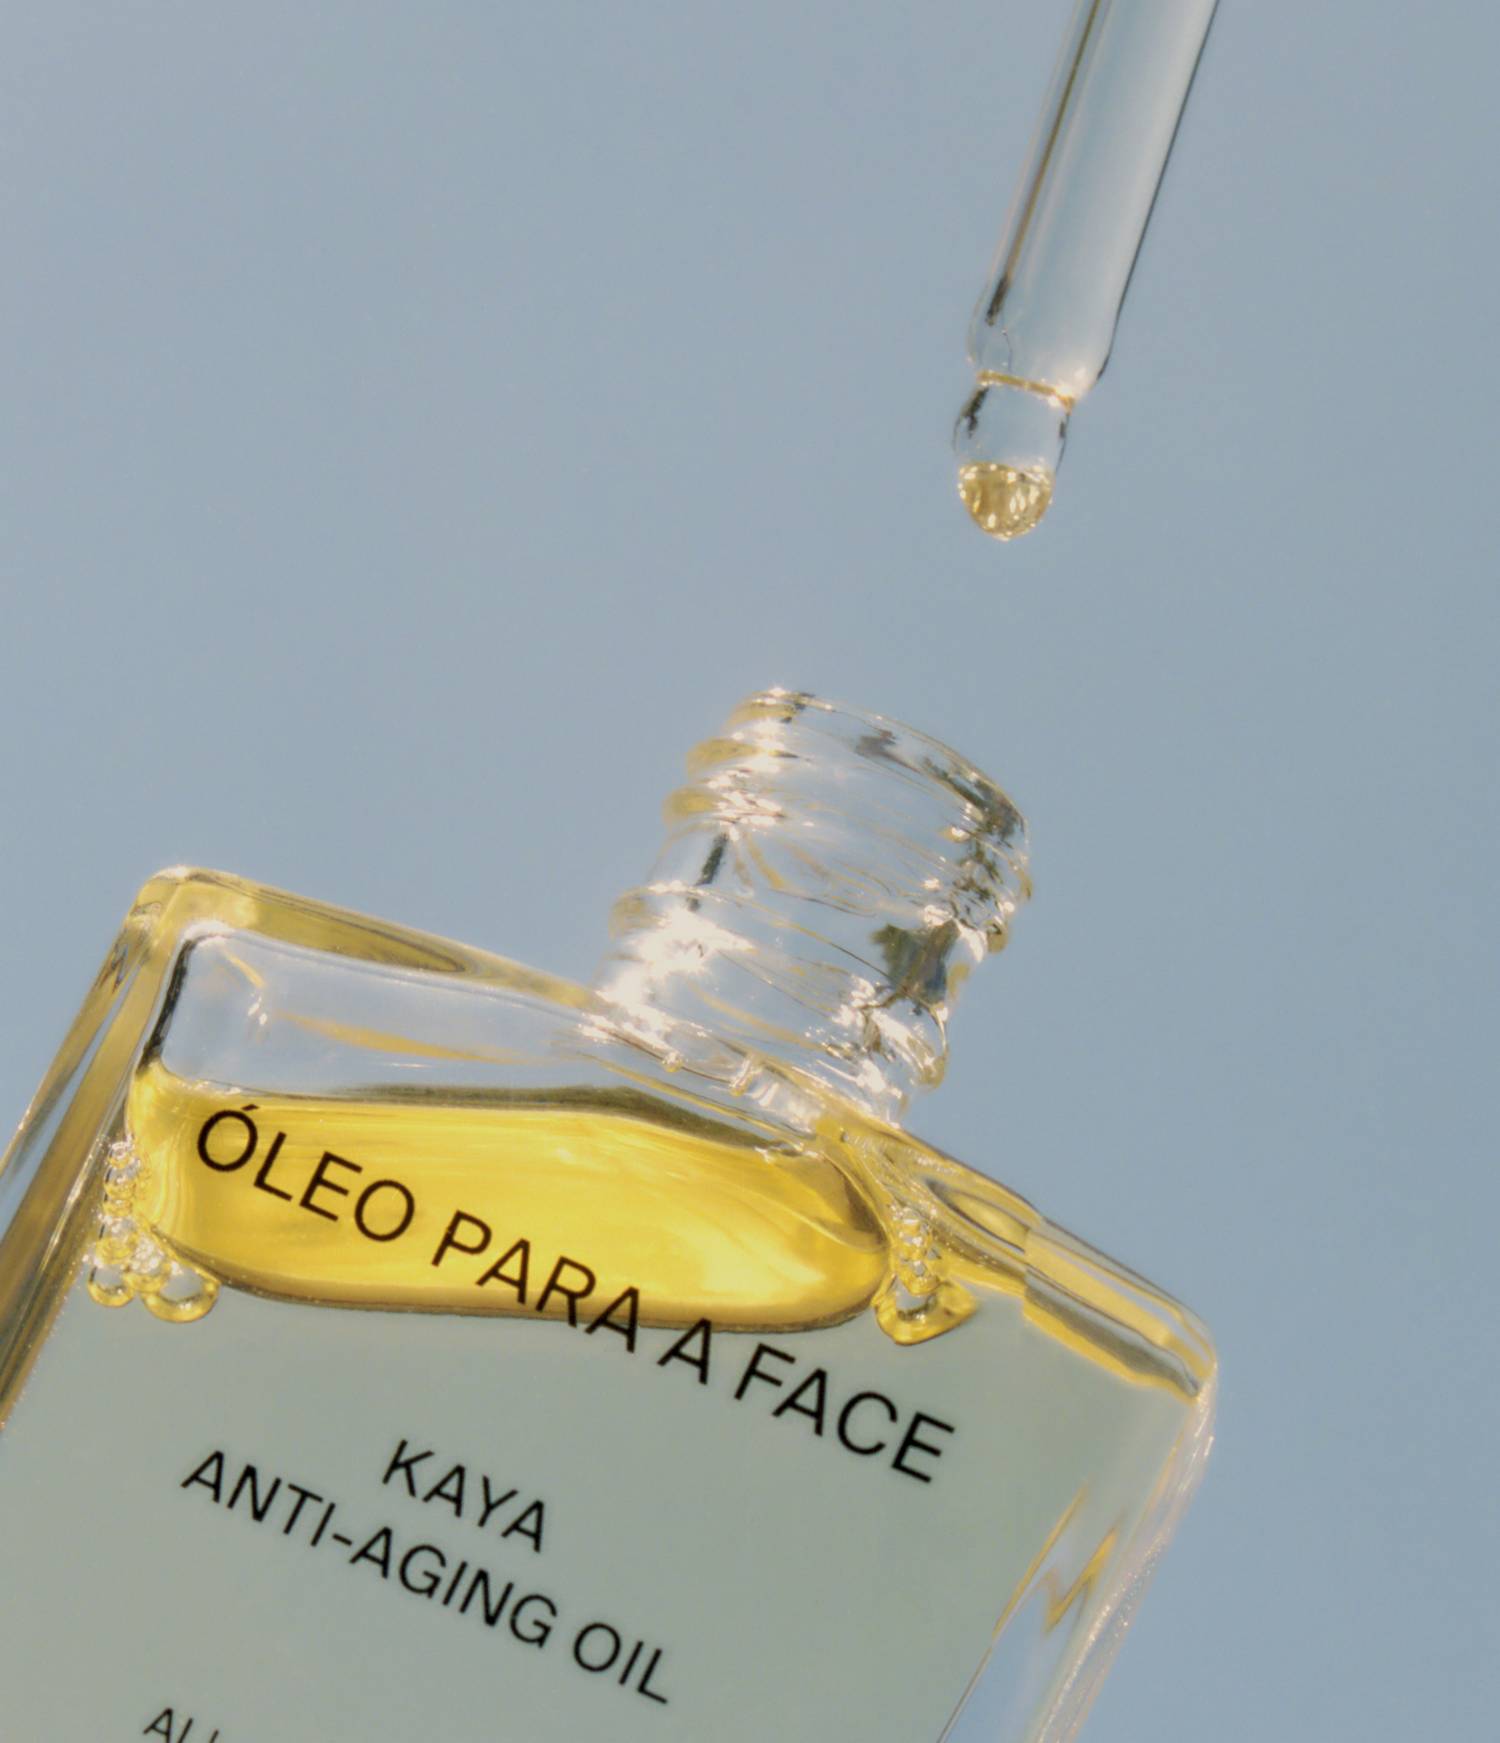 Costa Brazil Oleo Para A Face - Kaya Anti-Aging Face Oil
